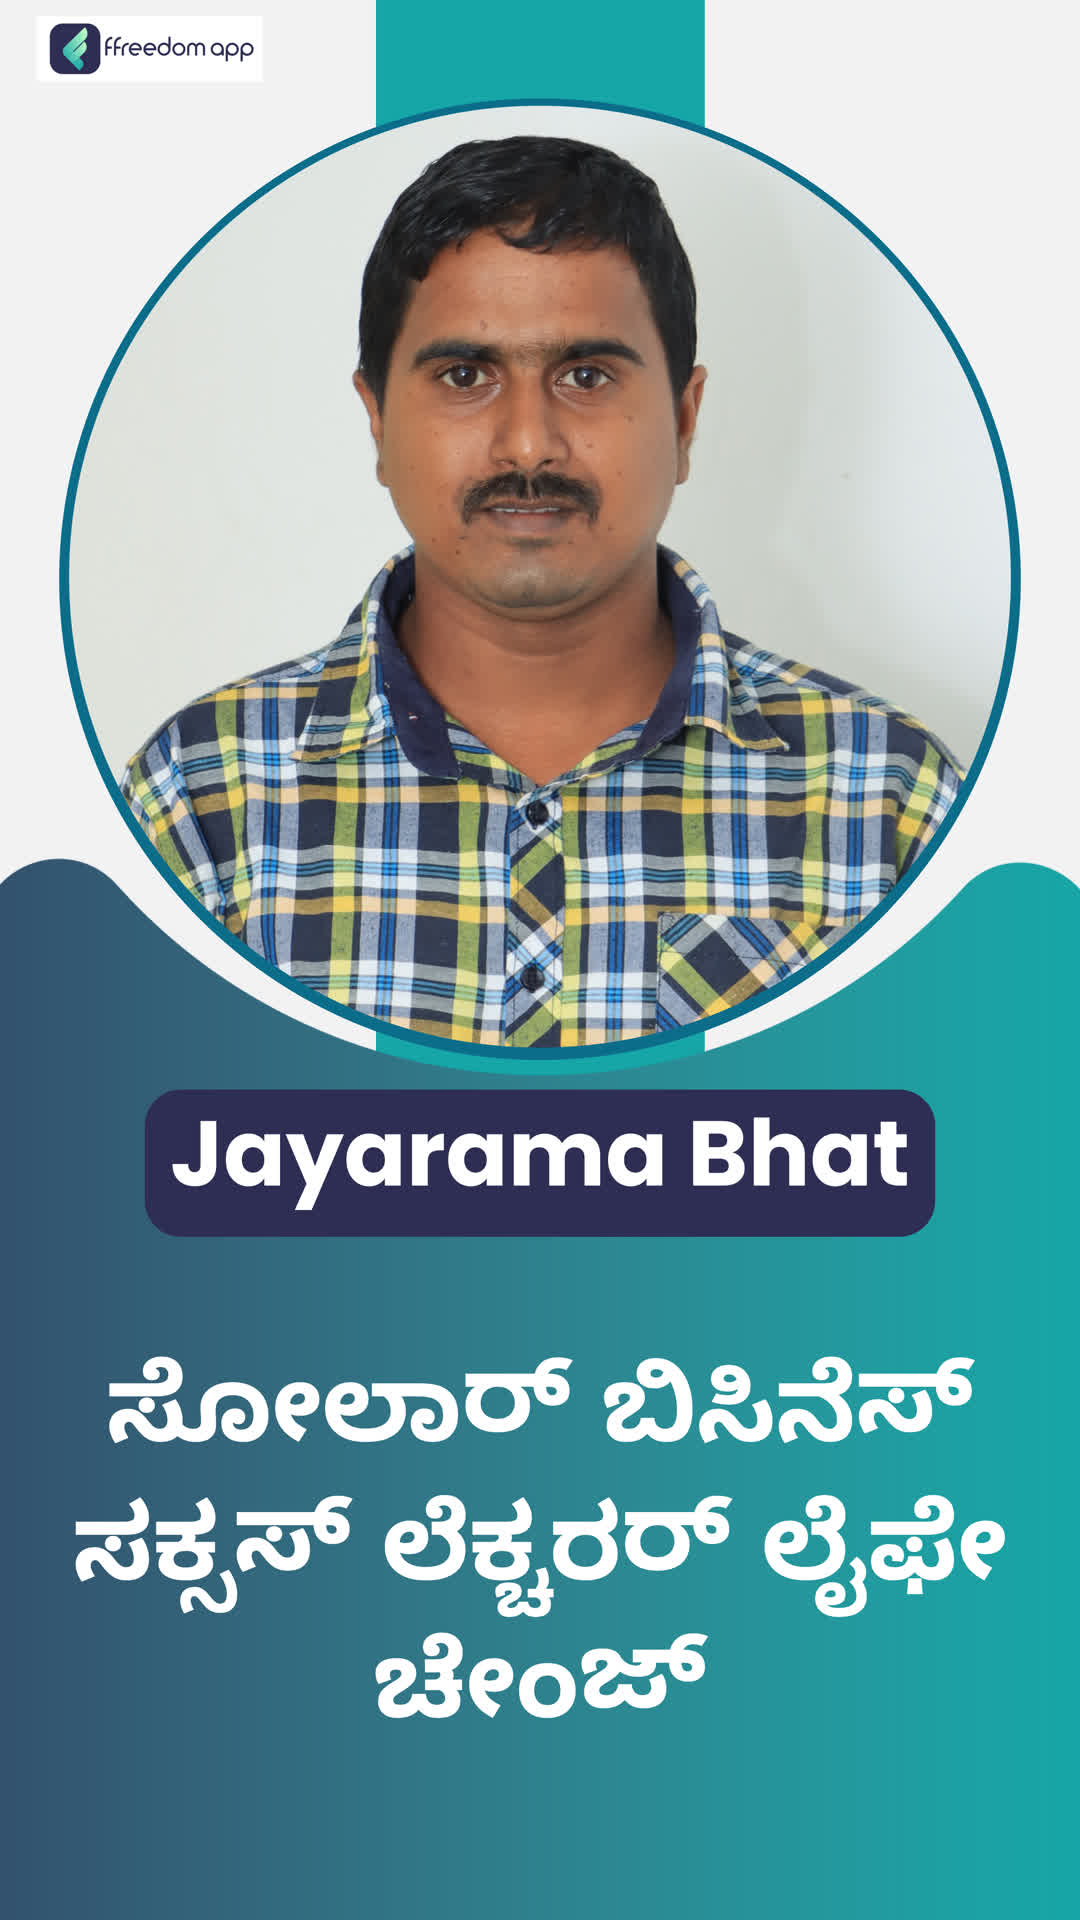 Jayarama Bhat's Honest Review of ffreedom app - Udupi ,Karnataka